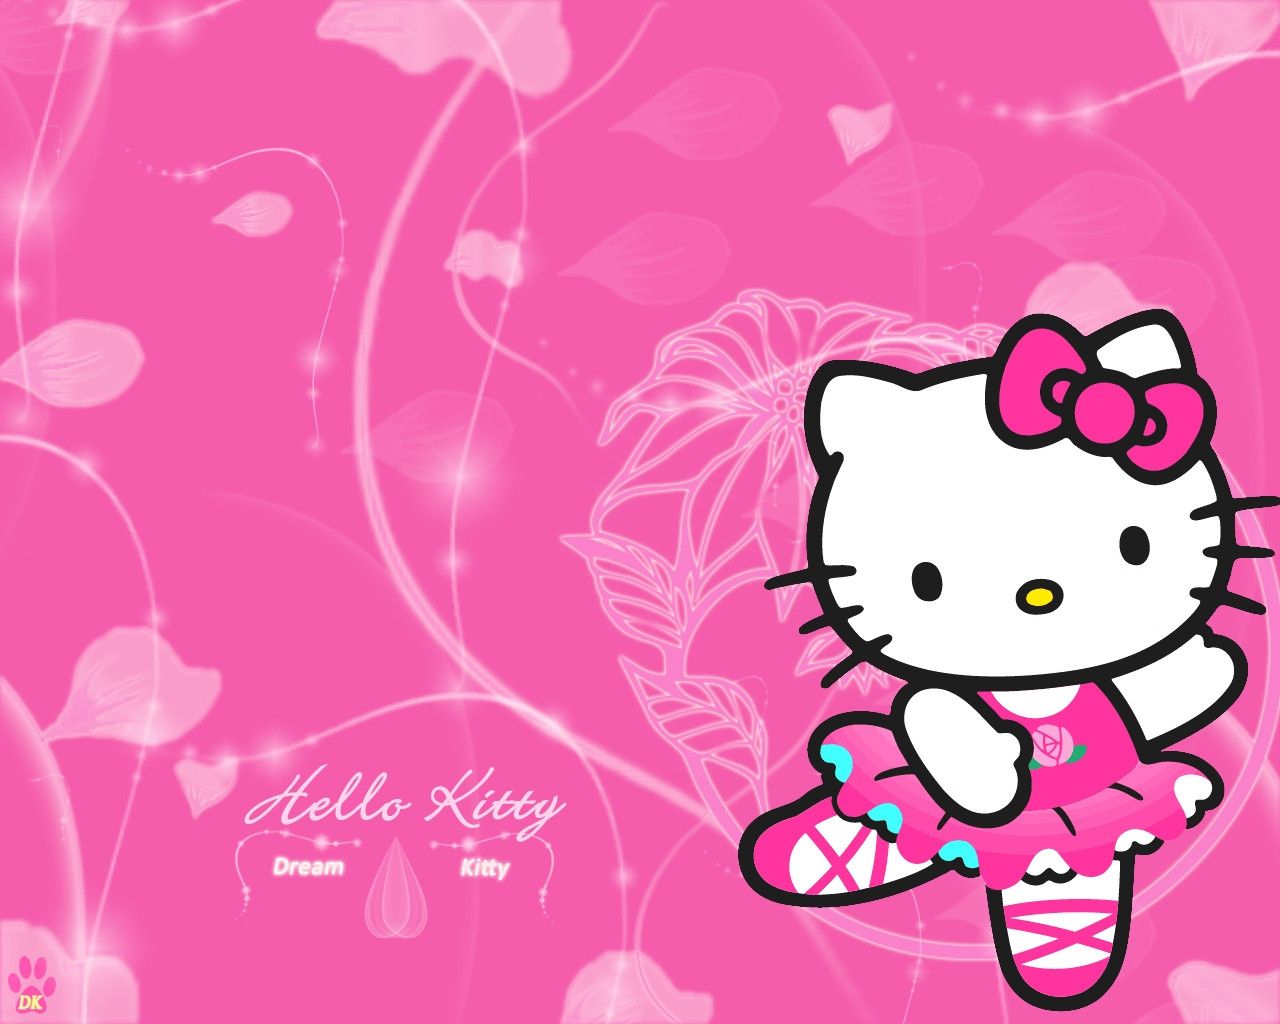 Hello Kitty Dream Wallpaper Full HD